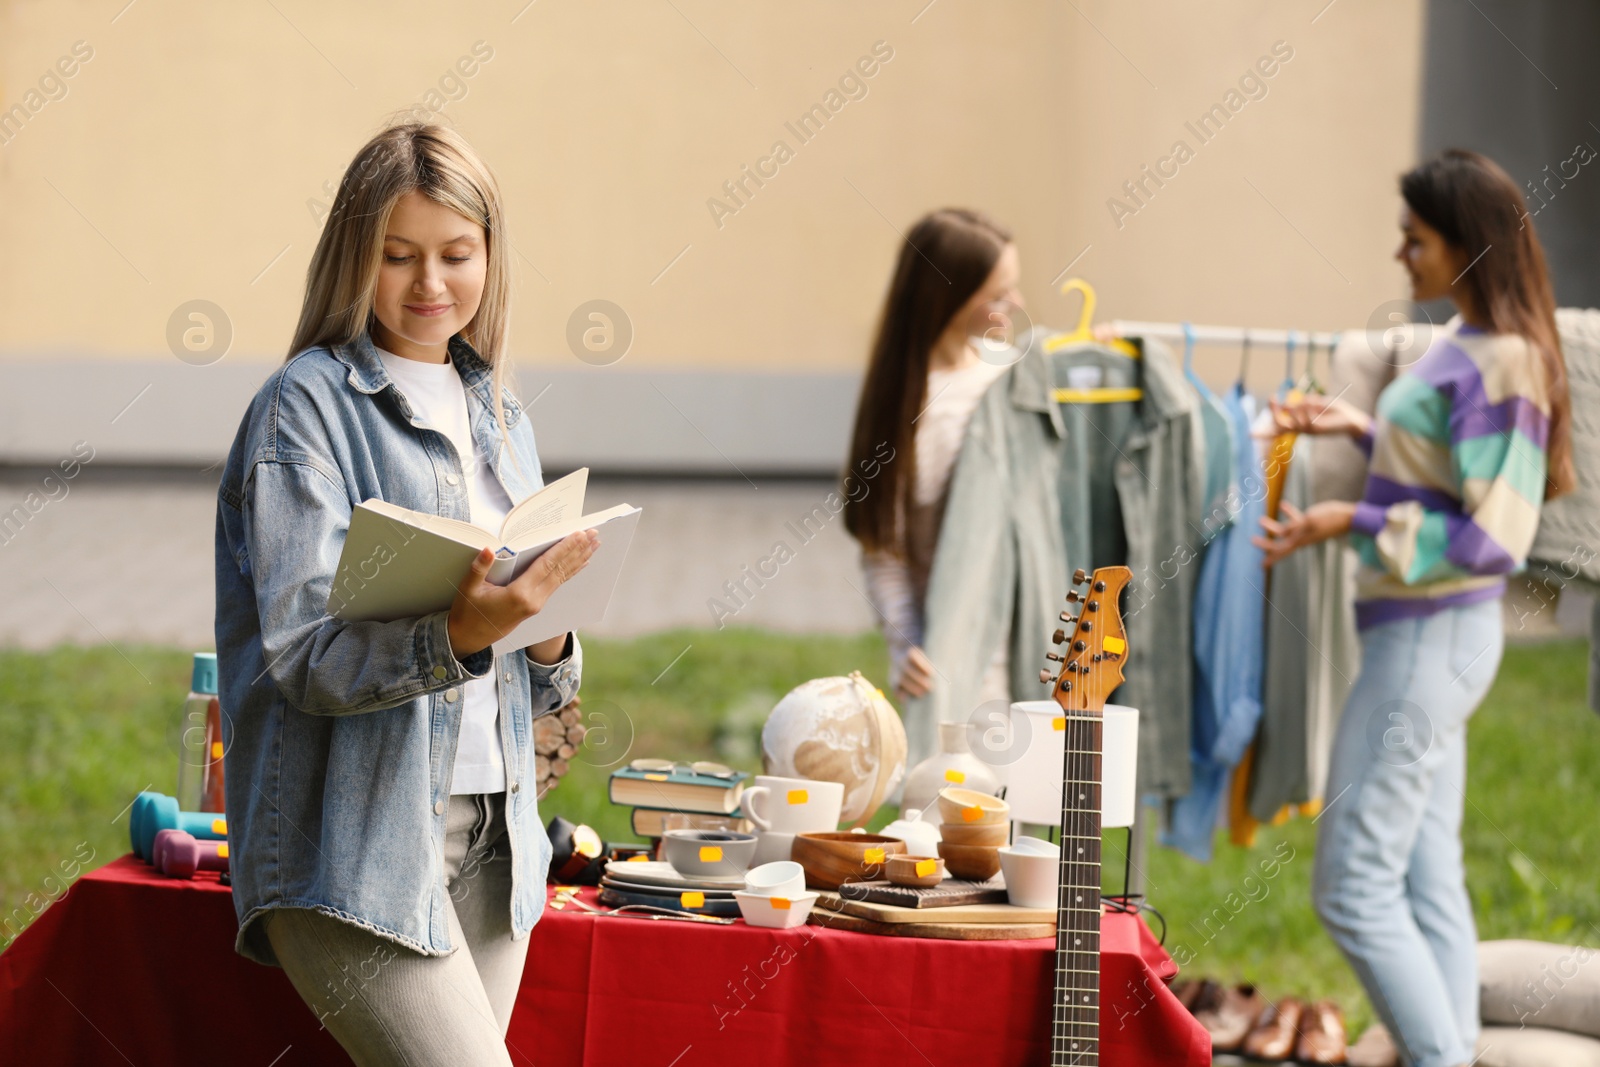 Photo of Women choosing items on garage sale in yard